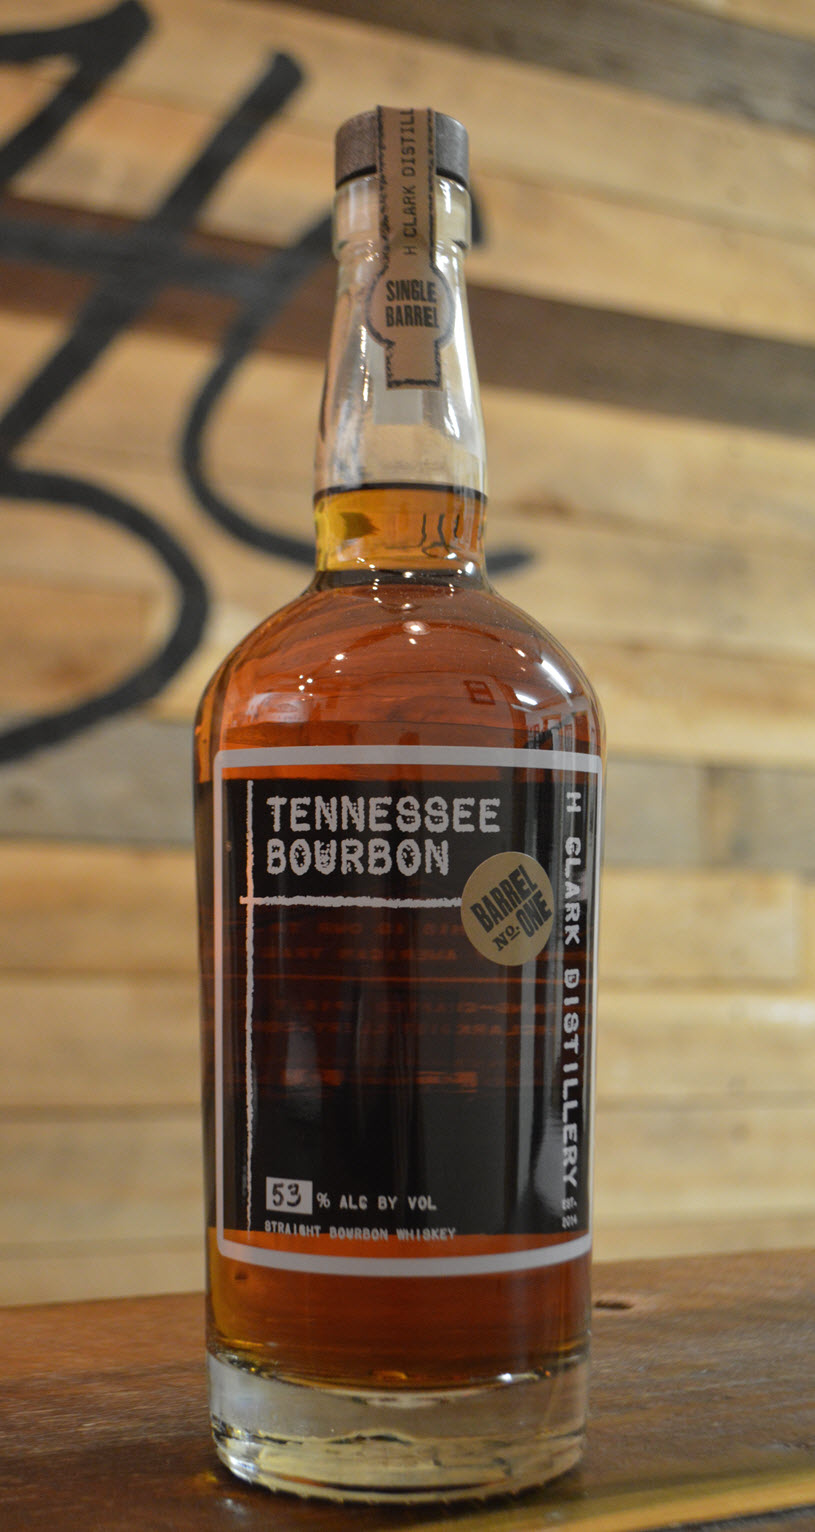 H Clark Distillery - Tennessee Bourbon Bottle No. 1